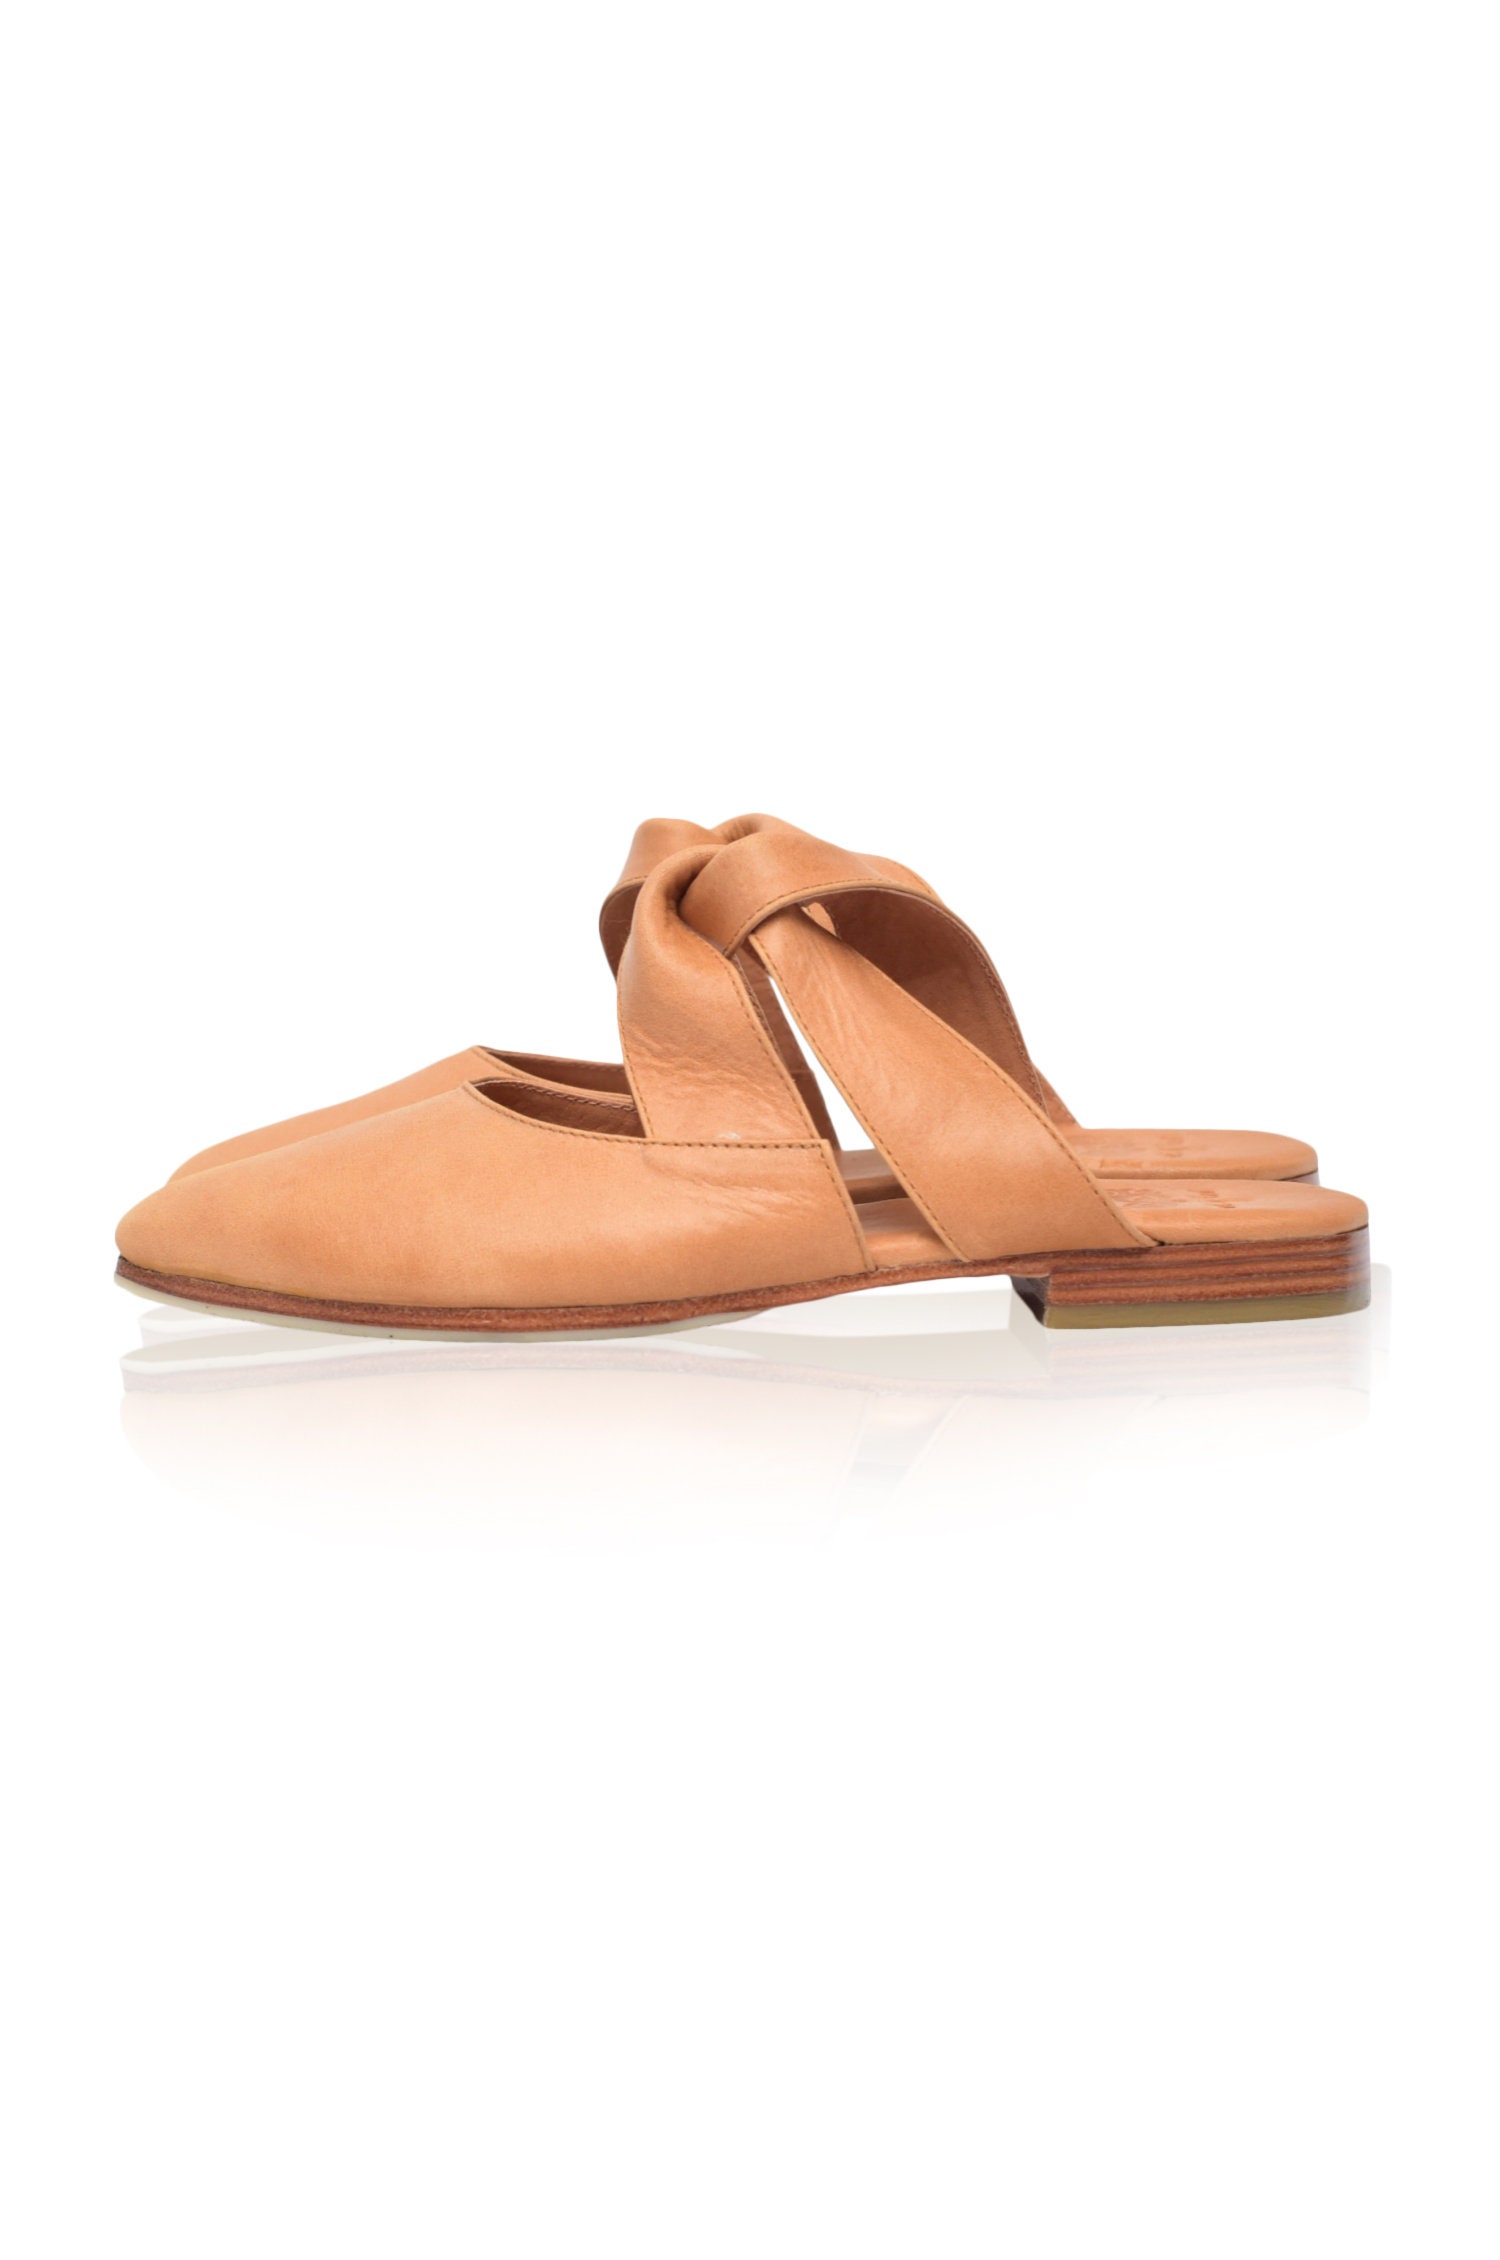 TAJ MAHAL. Leather Flat Sandals Boho Leather Sandals | Etsy